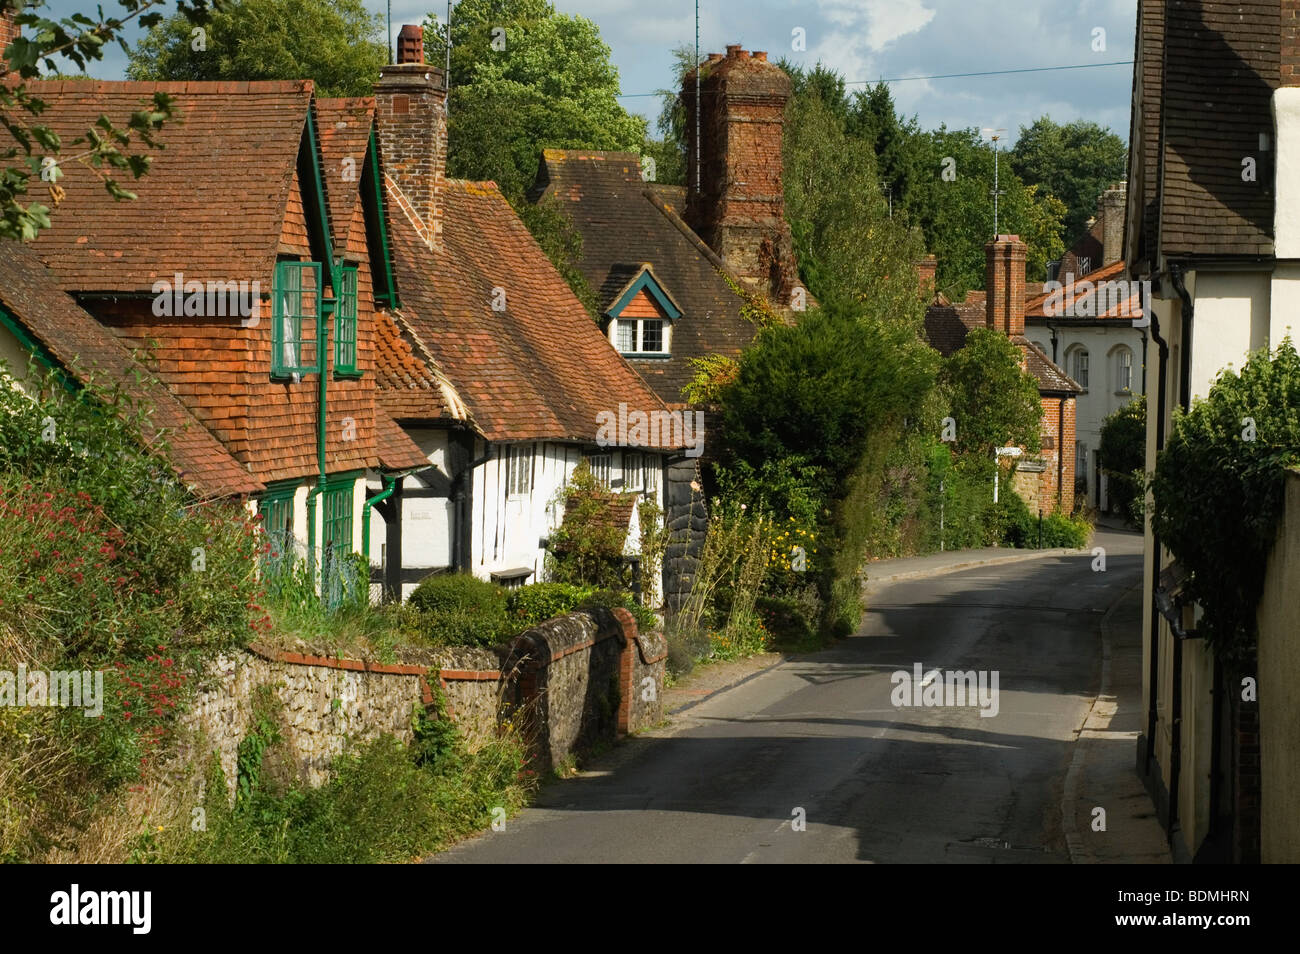 Shere Surrey a famous pretty English village near London UK HOMER SYKES Stock Photo